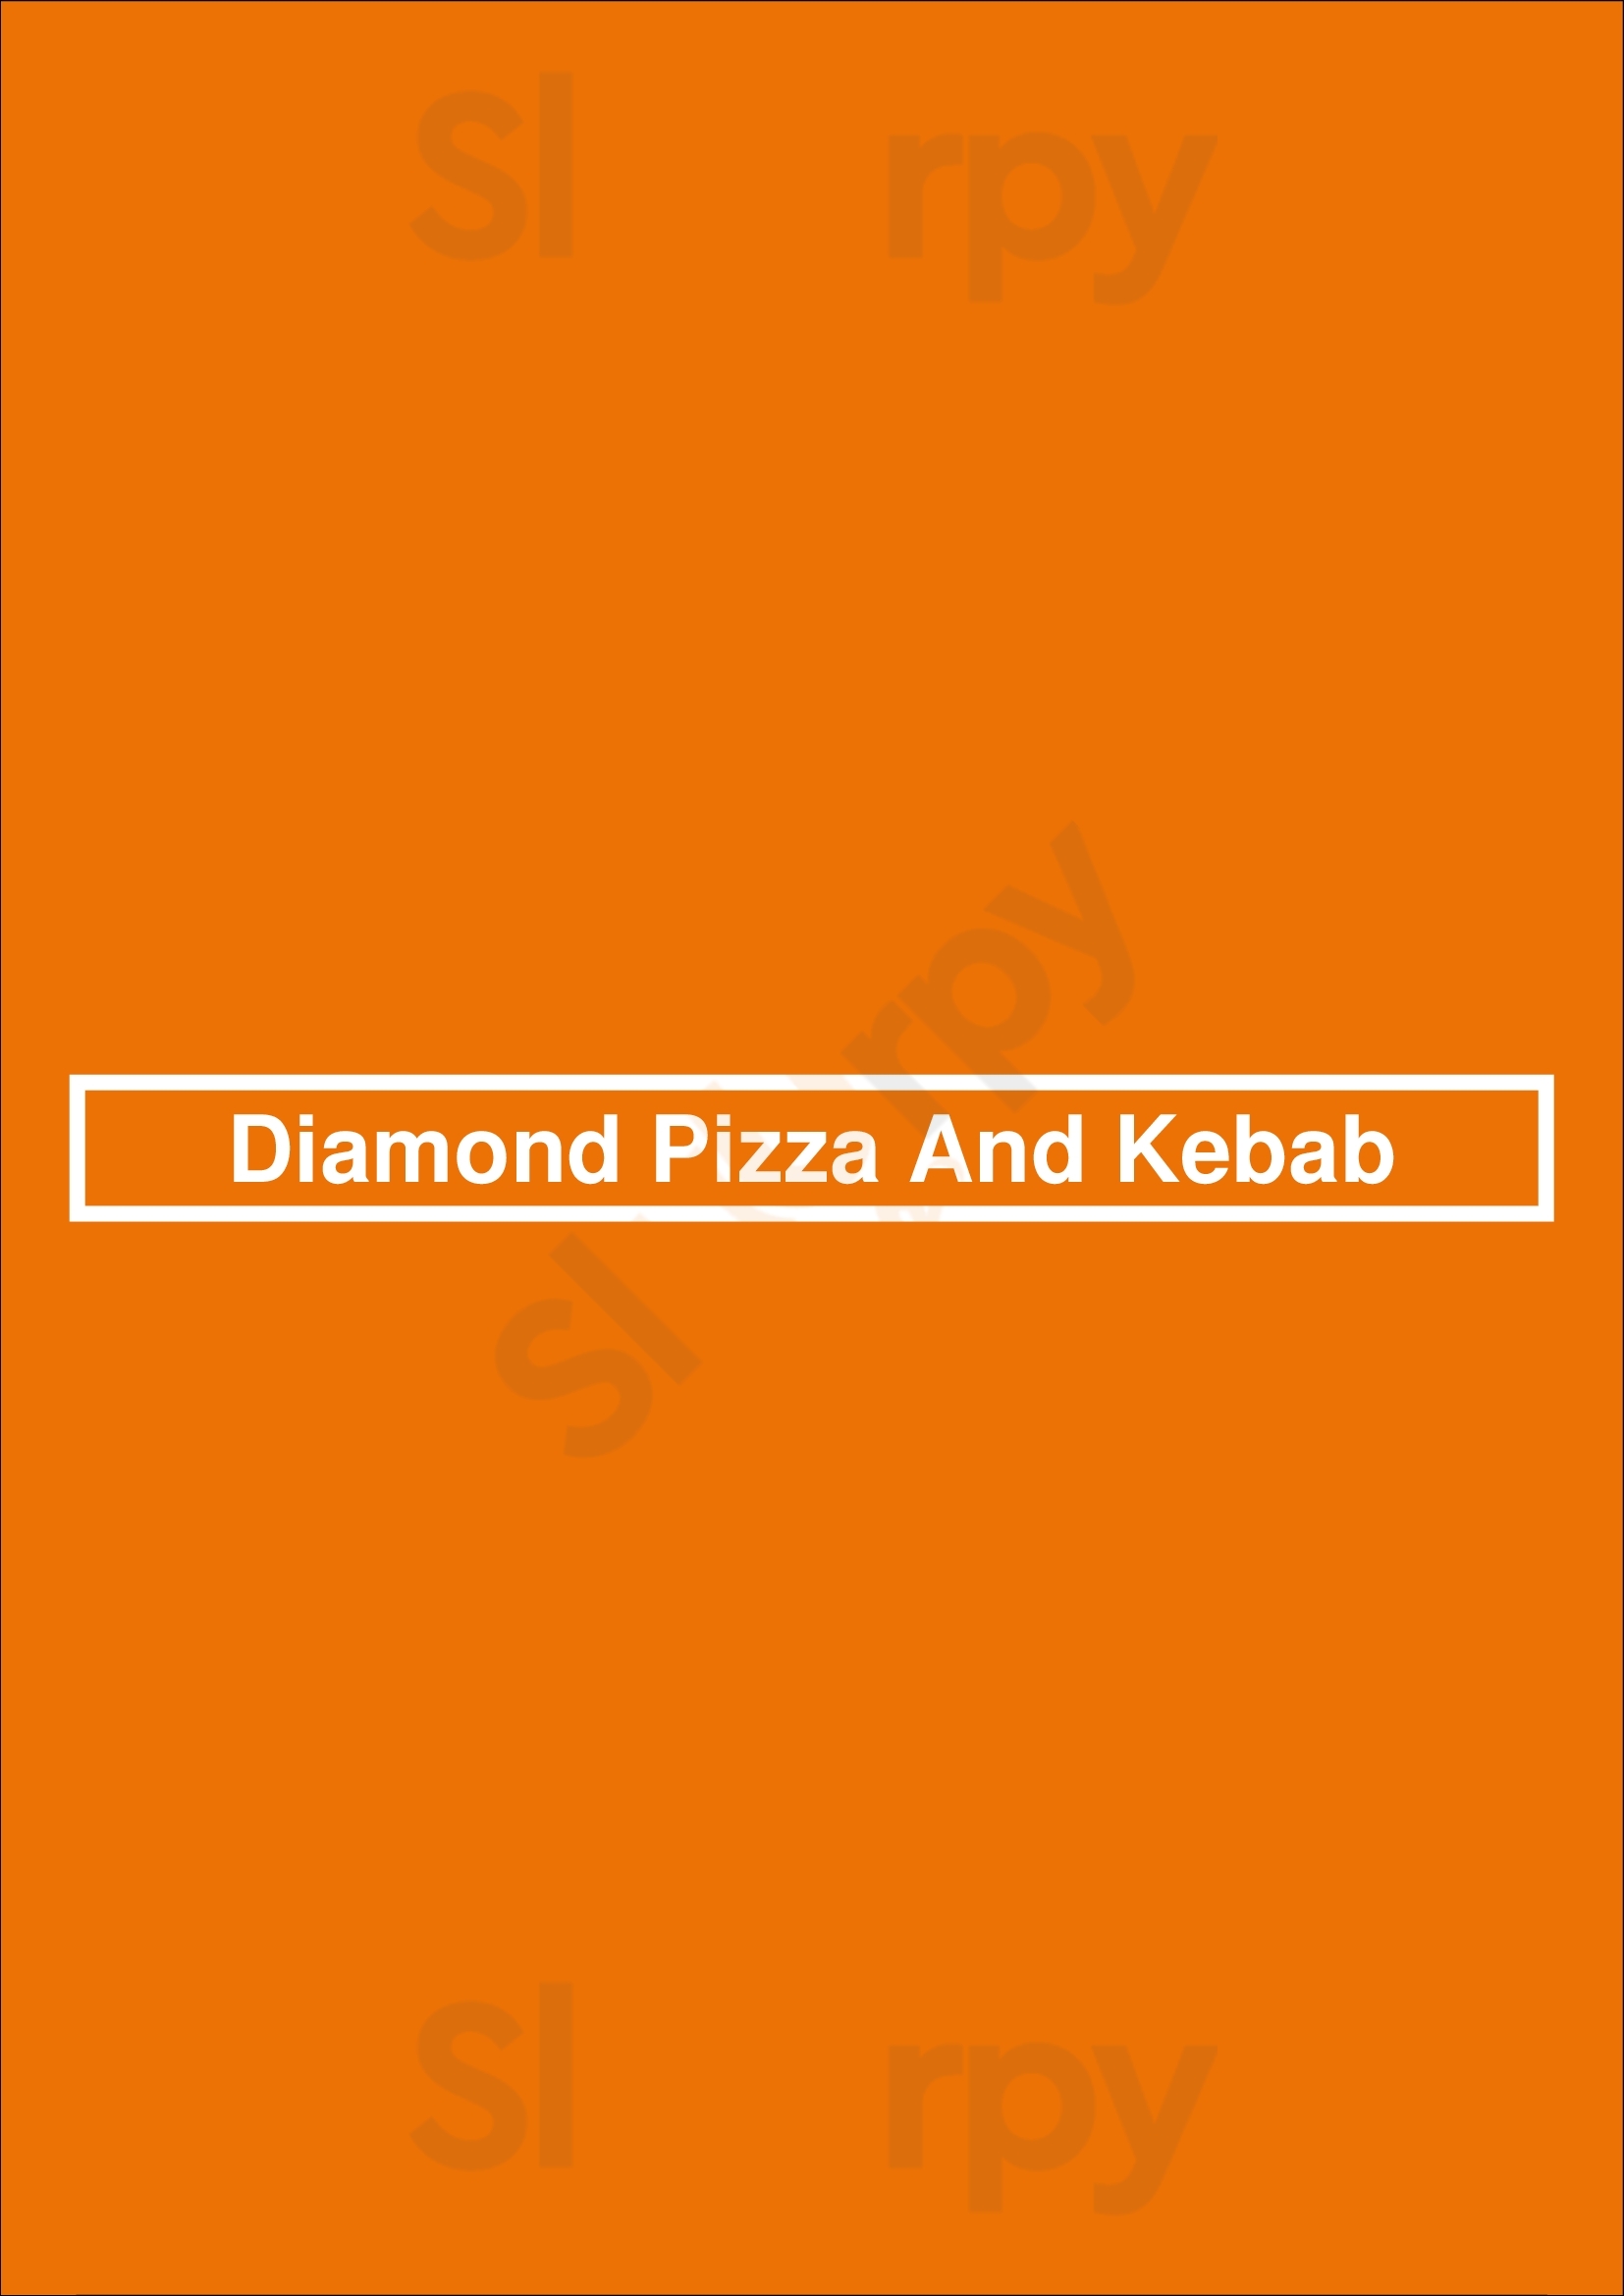 Diamond Pizza And Kebab Southampton Menu - 1